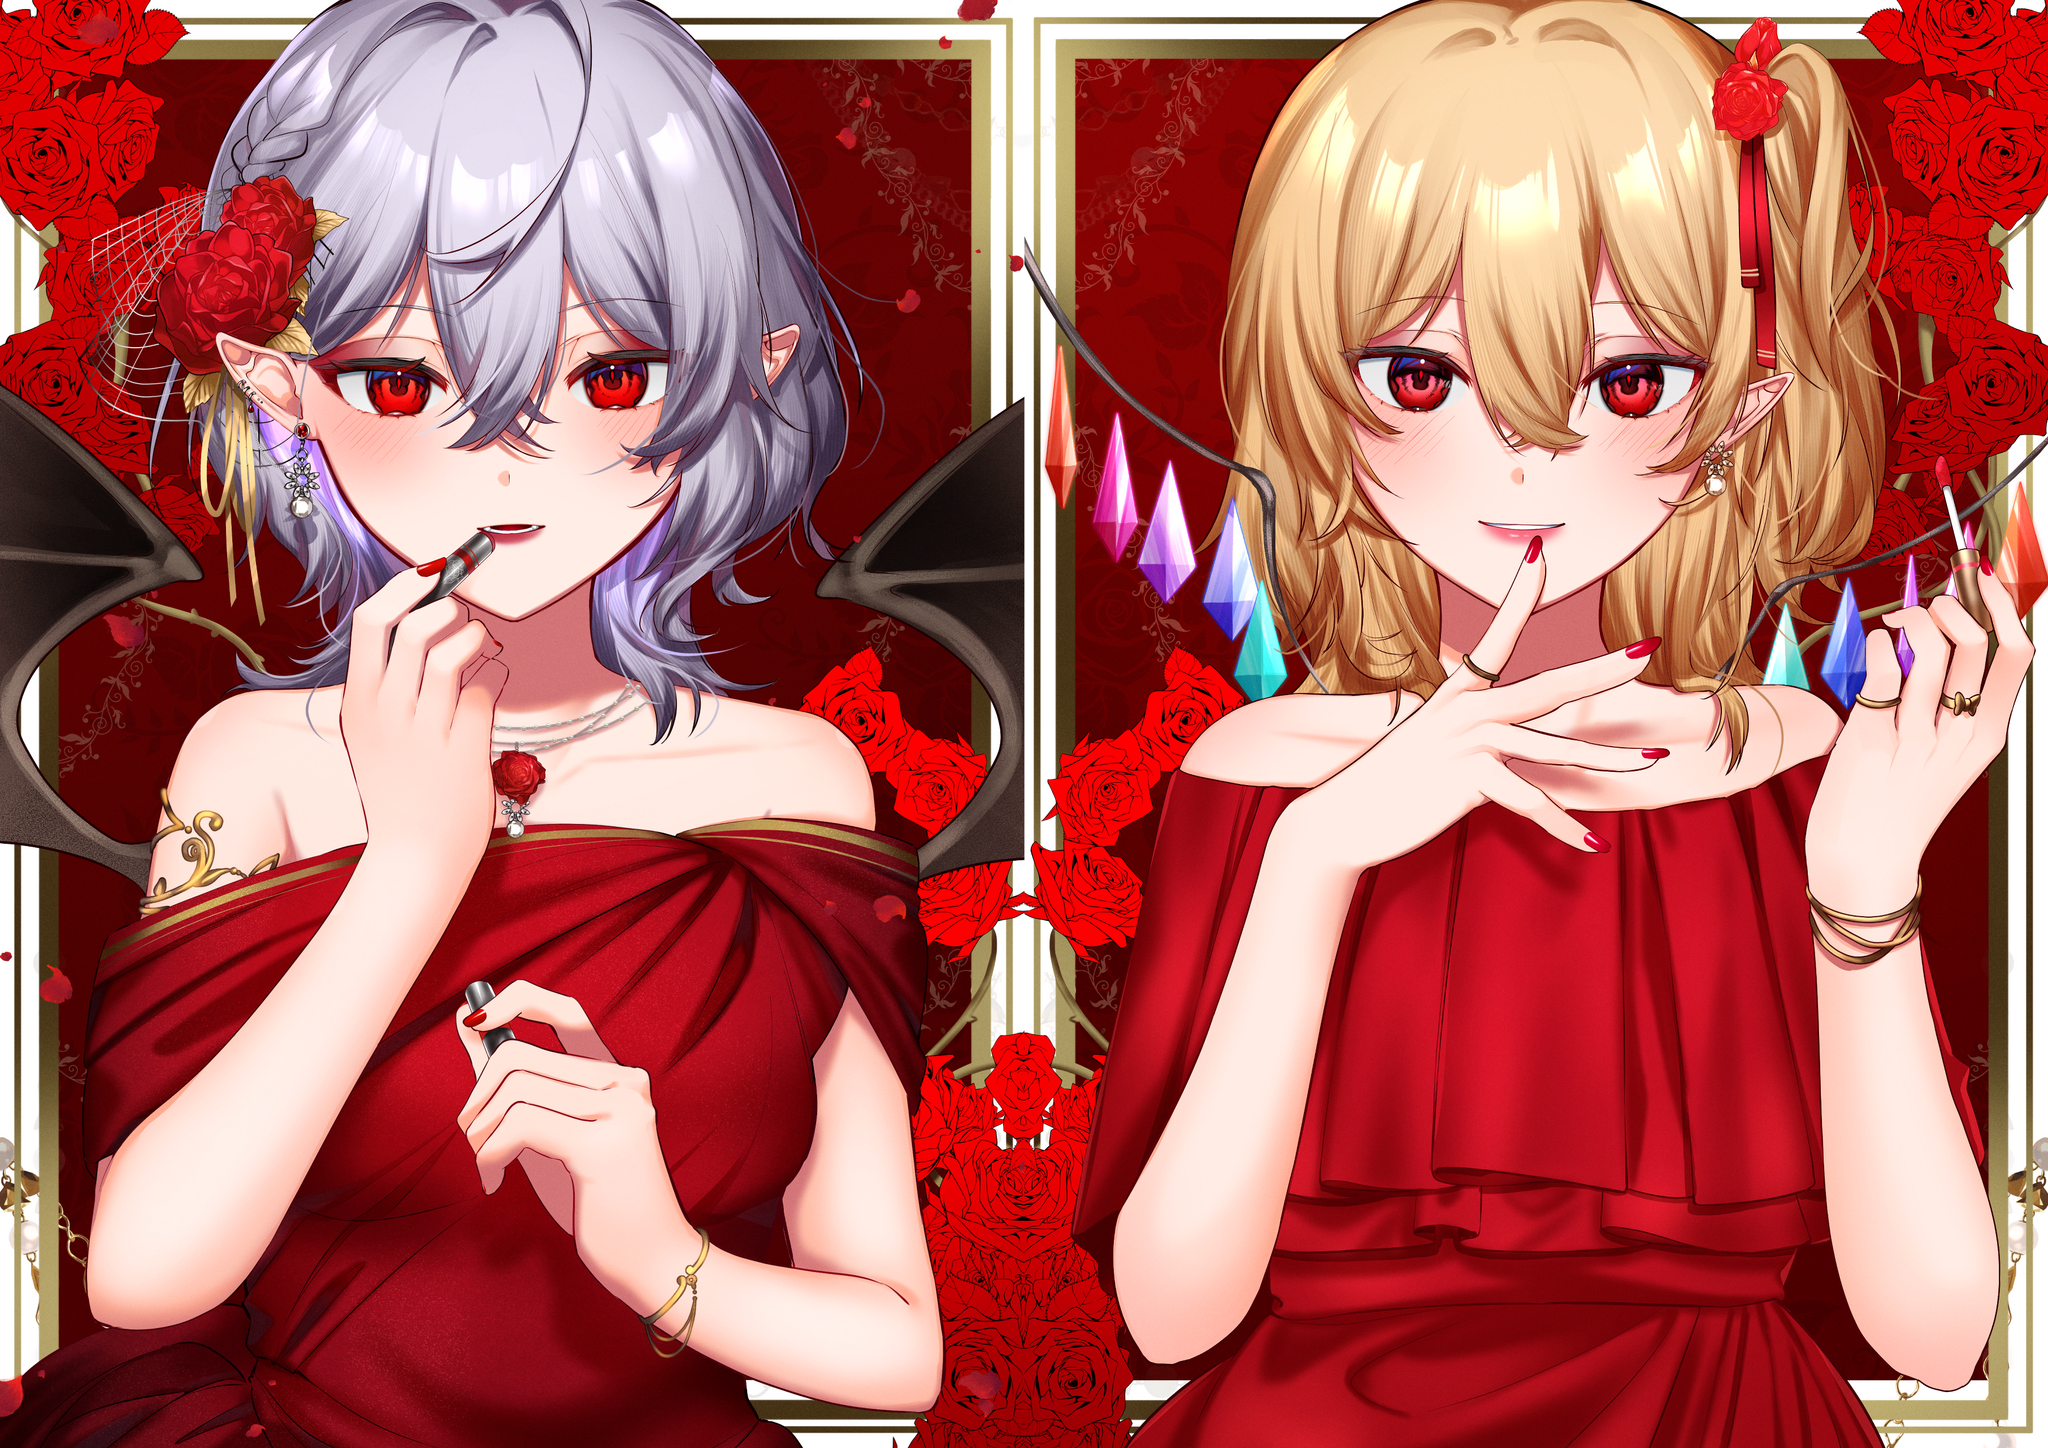 Scarlet Sisters - Longpost, Anime, Anime art, Art, Flandre scarlet, Remilia scarlet, Touhou